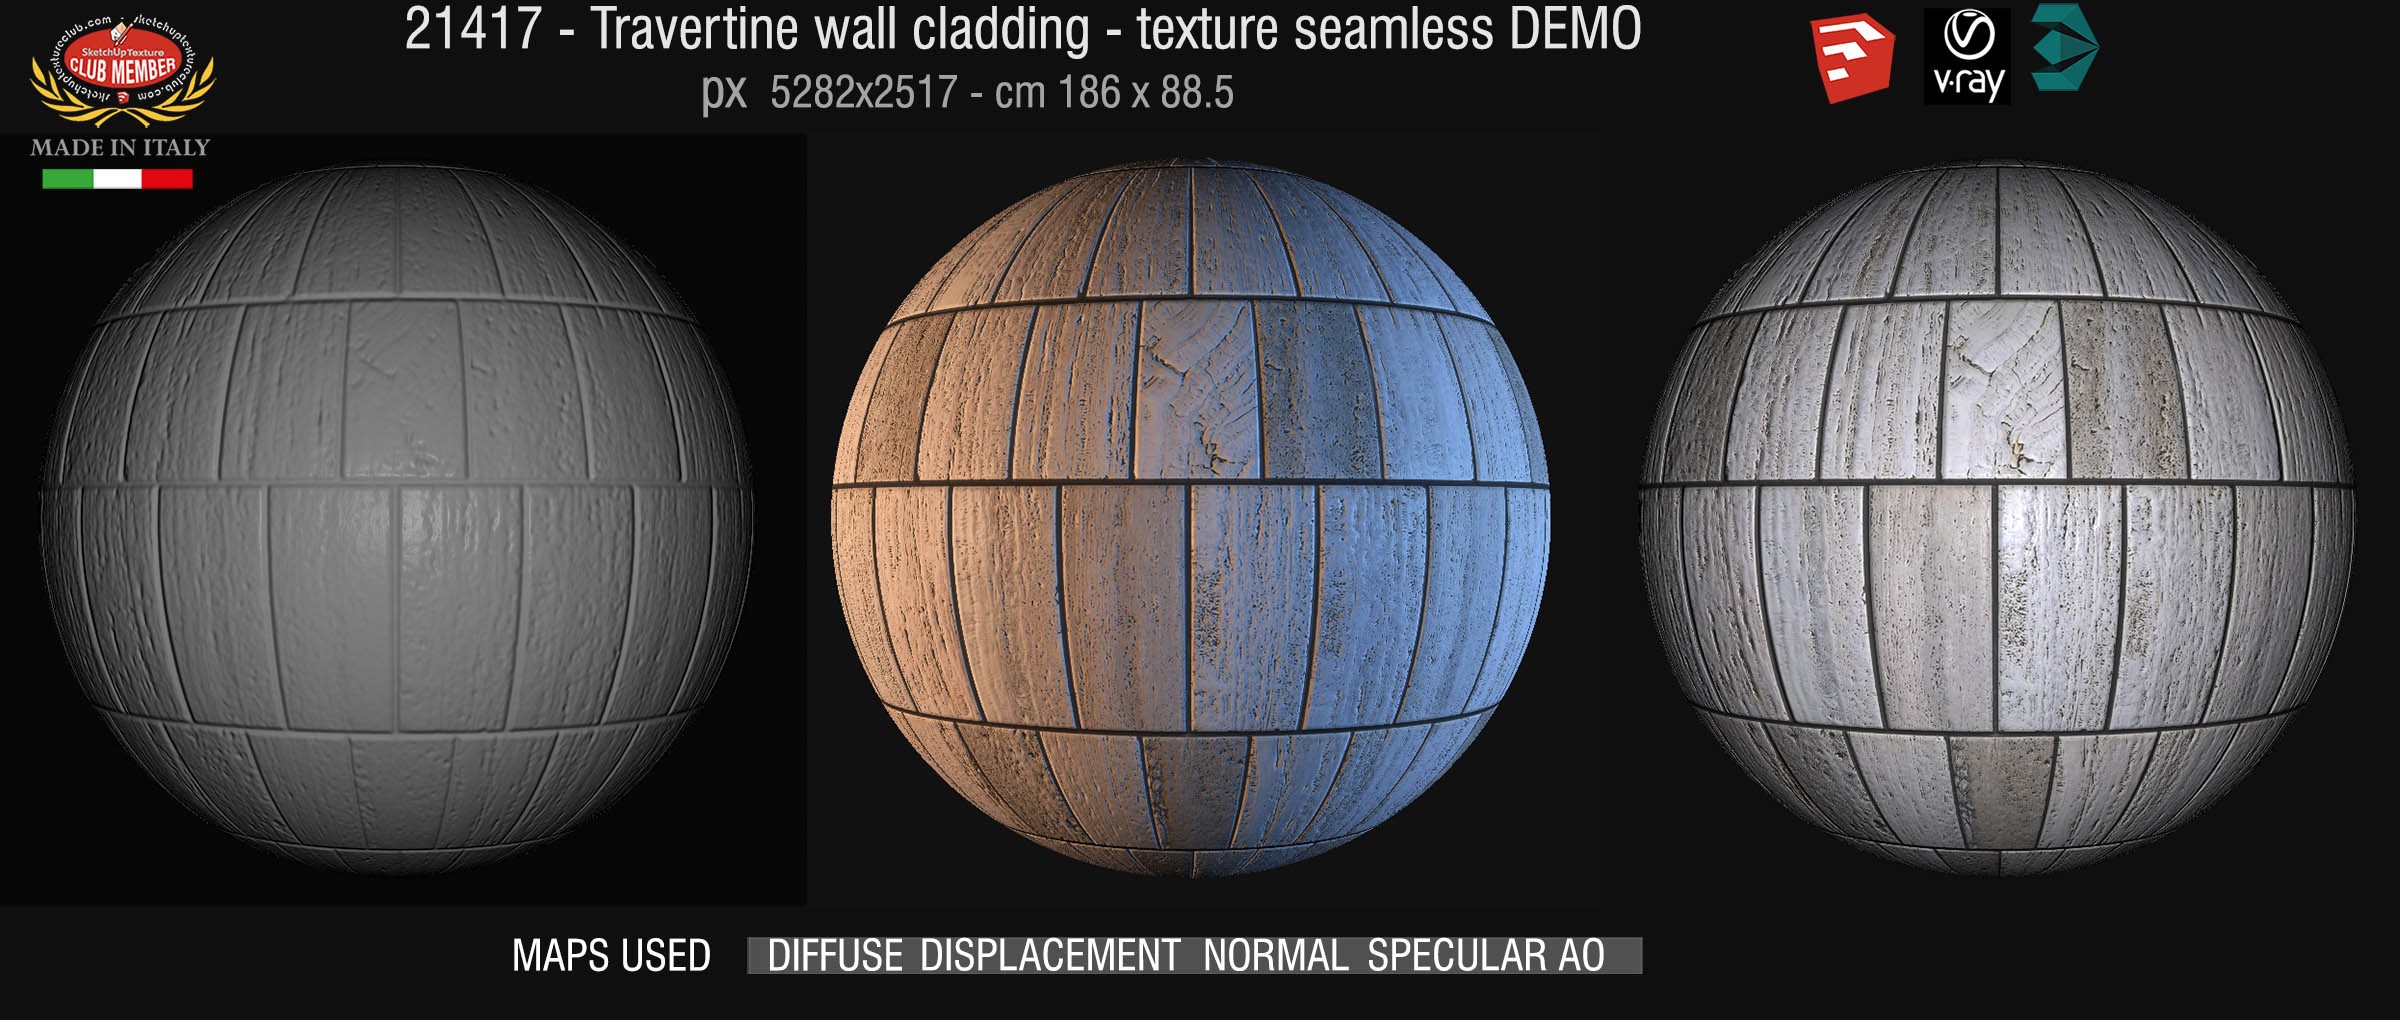 21417 travertine wall cladding texture seamless  + maps DEMO